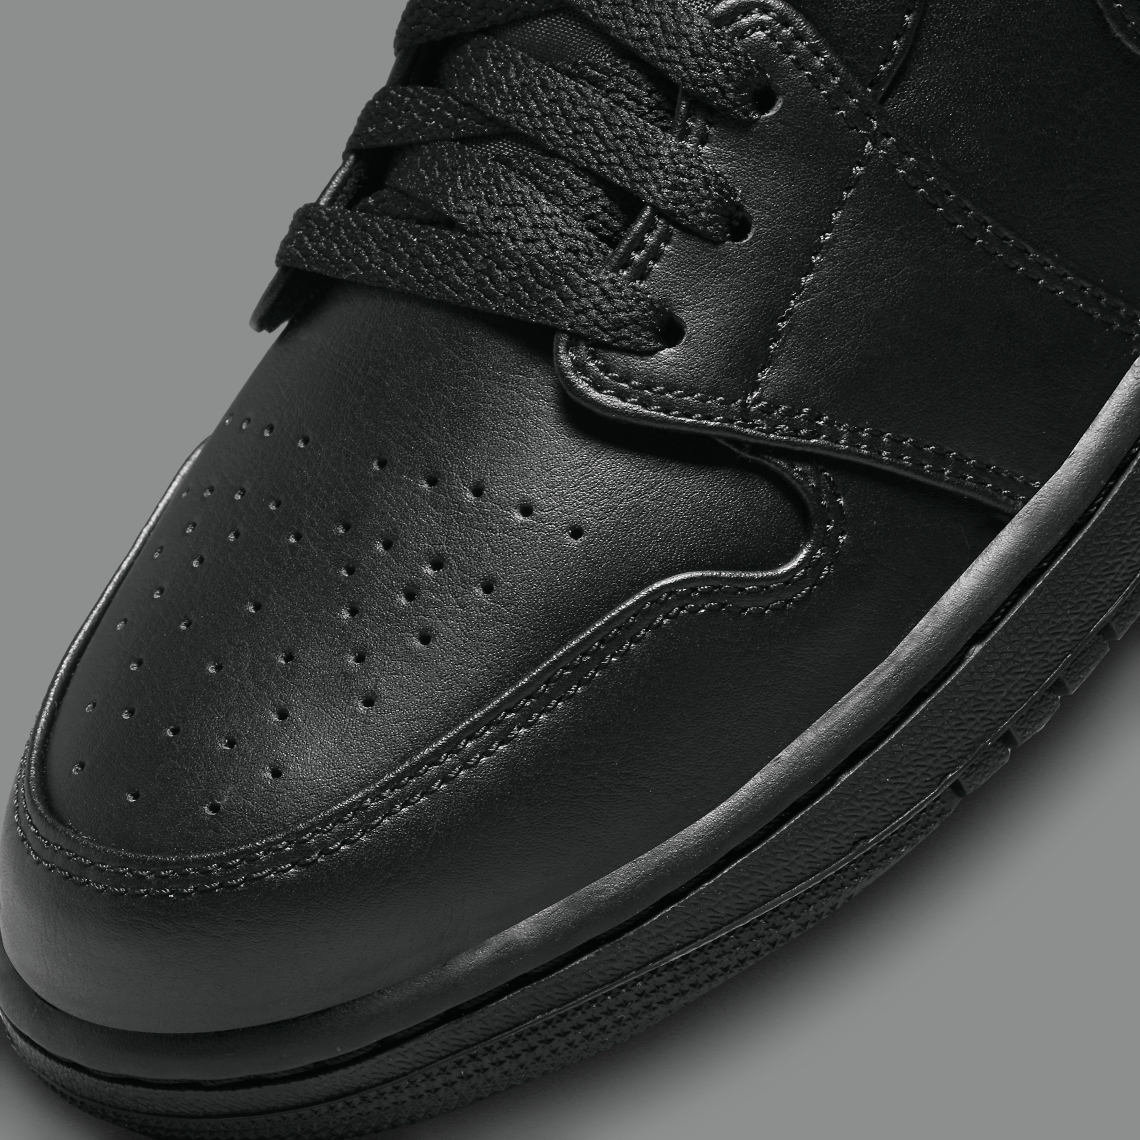 Air Jordan 1 Mid "Triple Black" 554724-093 | SneakerNews.com